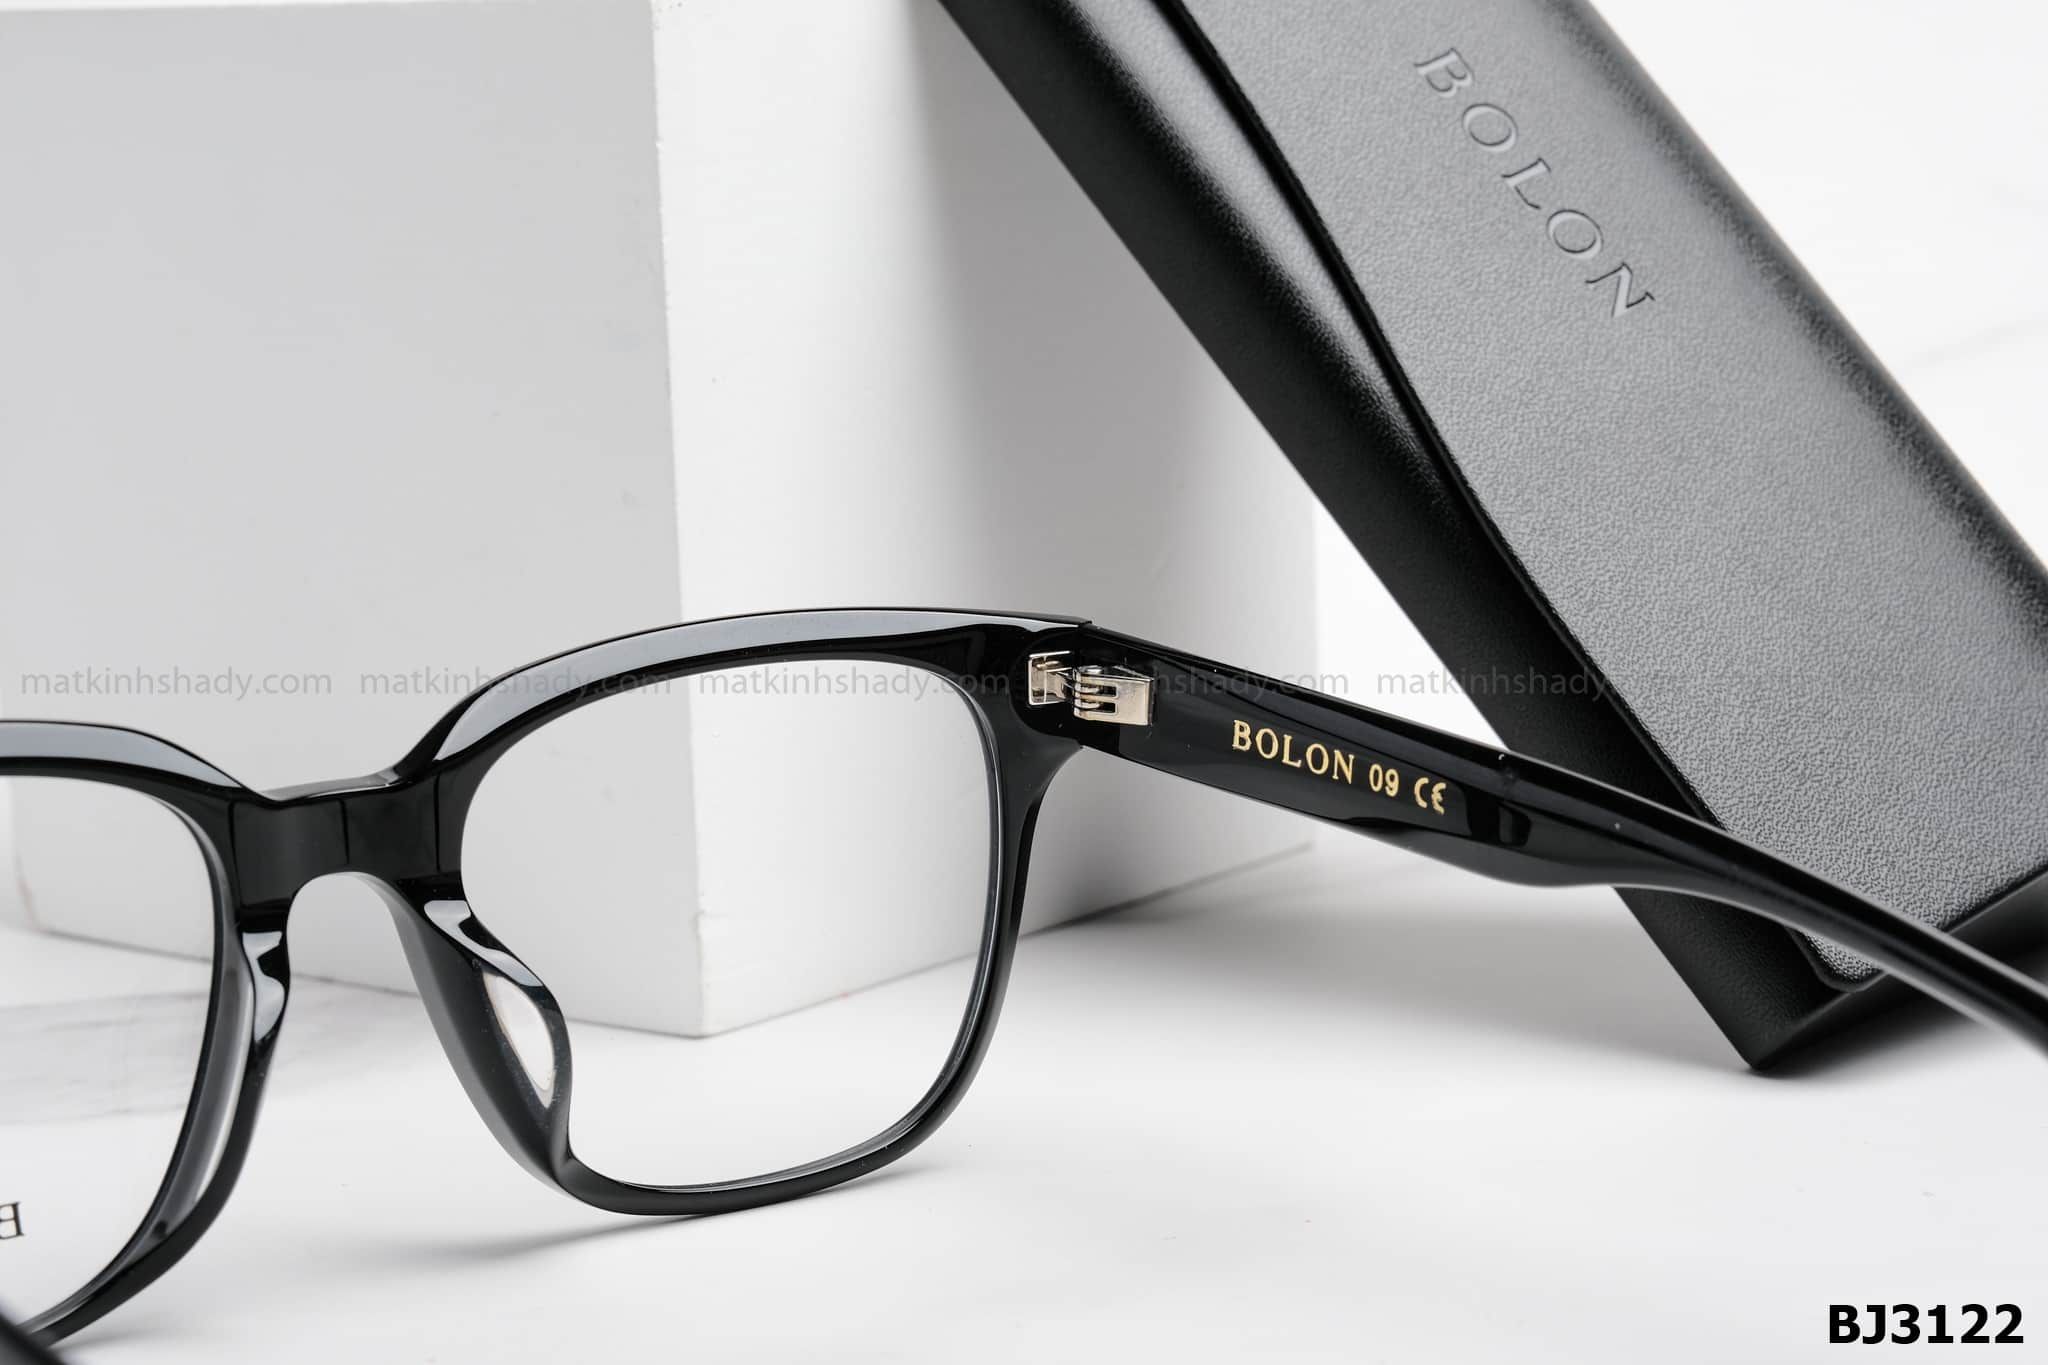  Bolon Eyewear - Glasses - BJ3122 